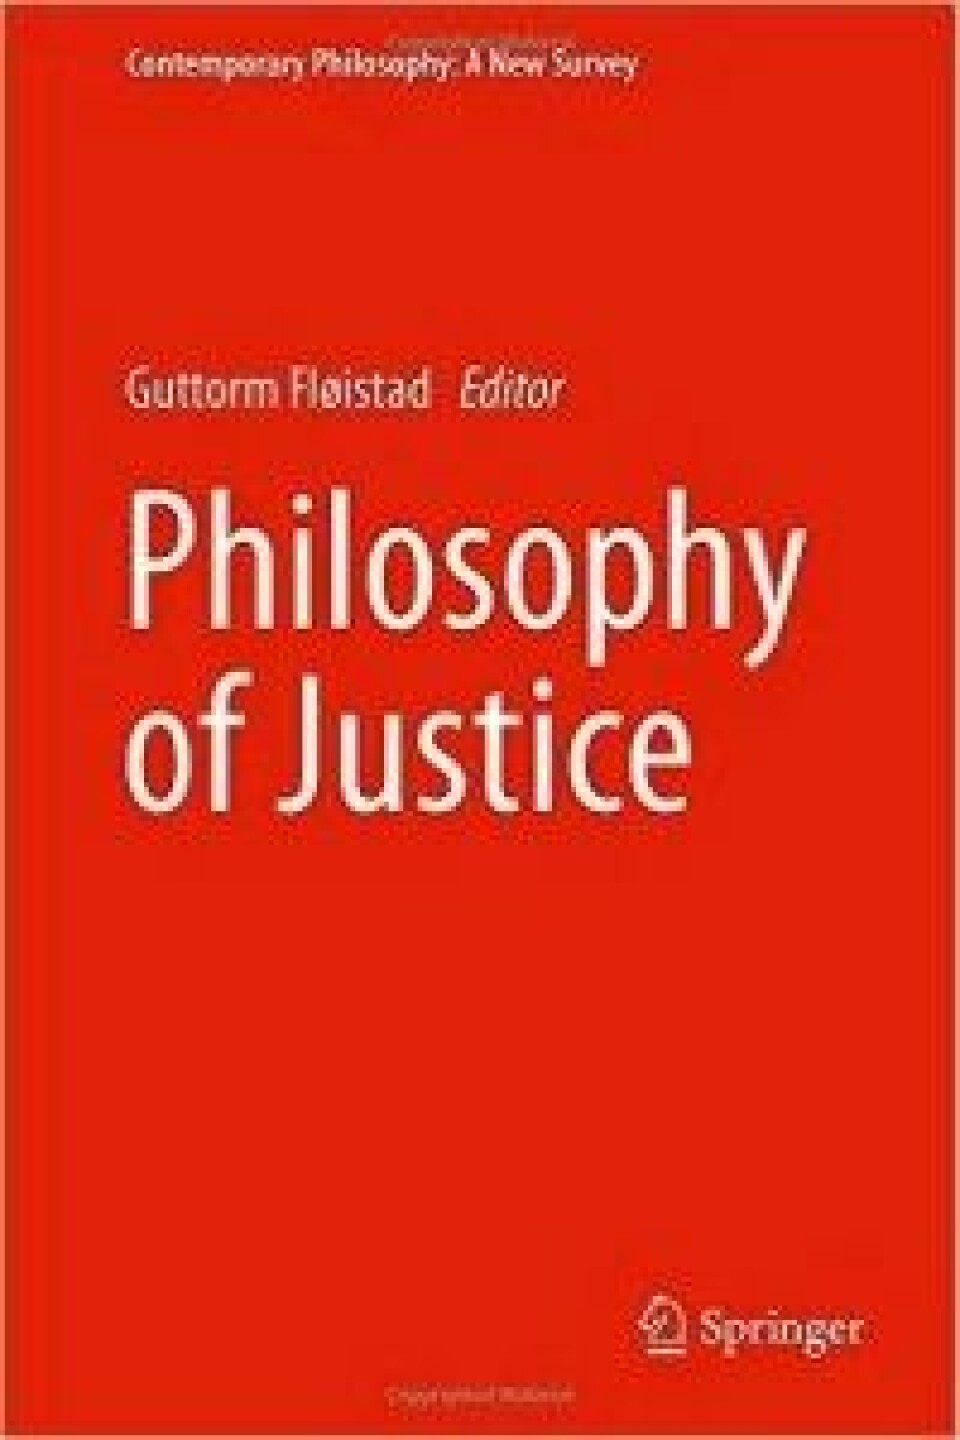 Philosophy of Justice – redigert av Guttorm Fløistad. Springer 2015